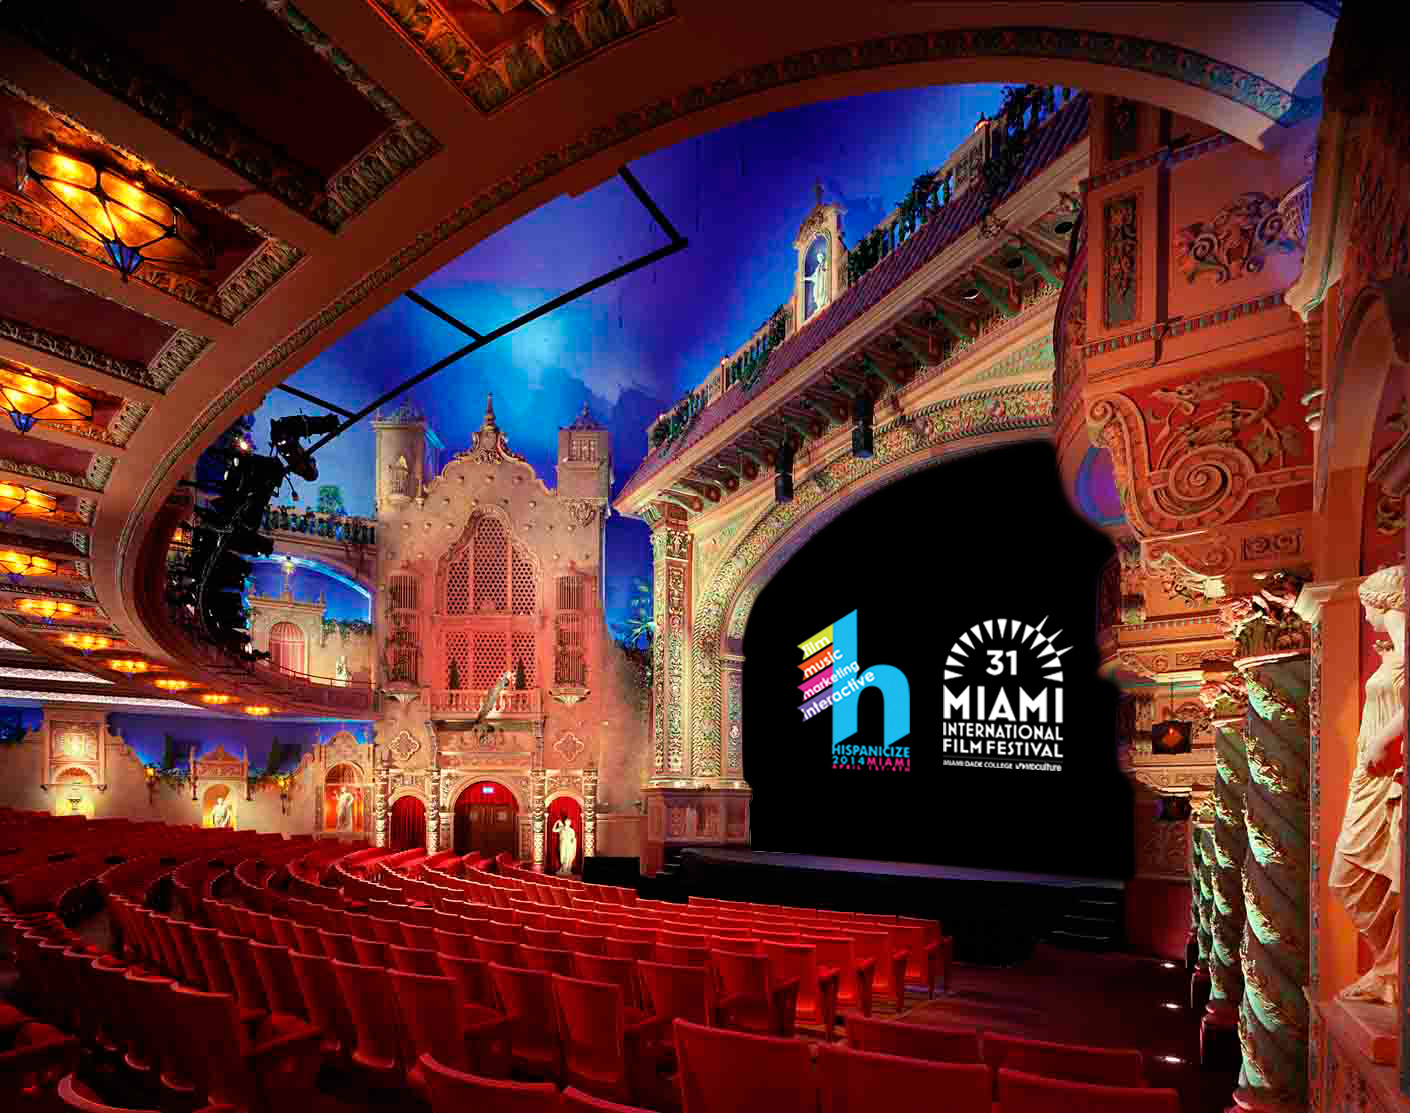 Hispanicize 2014 and Miami International Film Festival to Host Biggest Night of Film at Downtown Miami’s Gusman Center